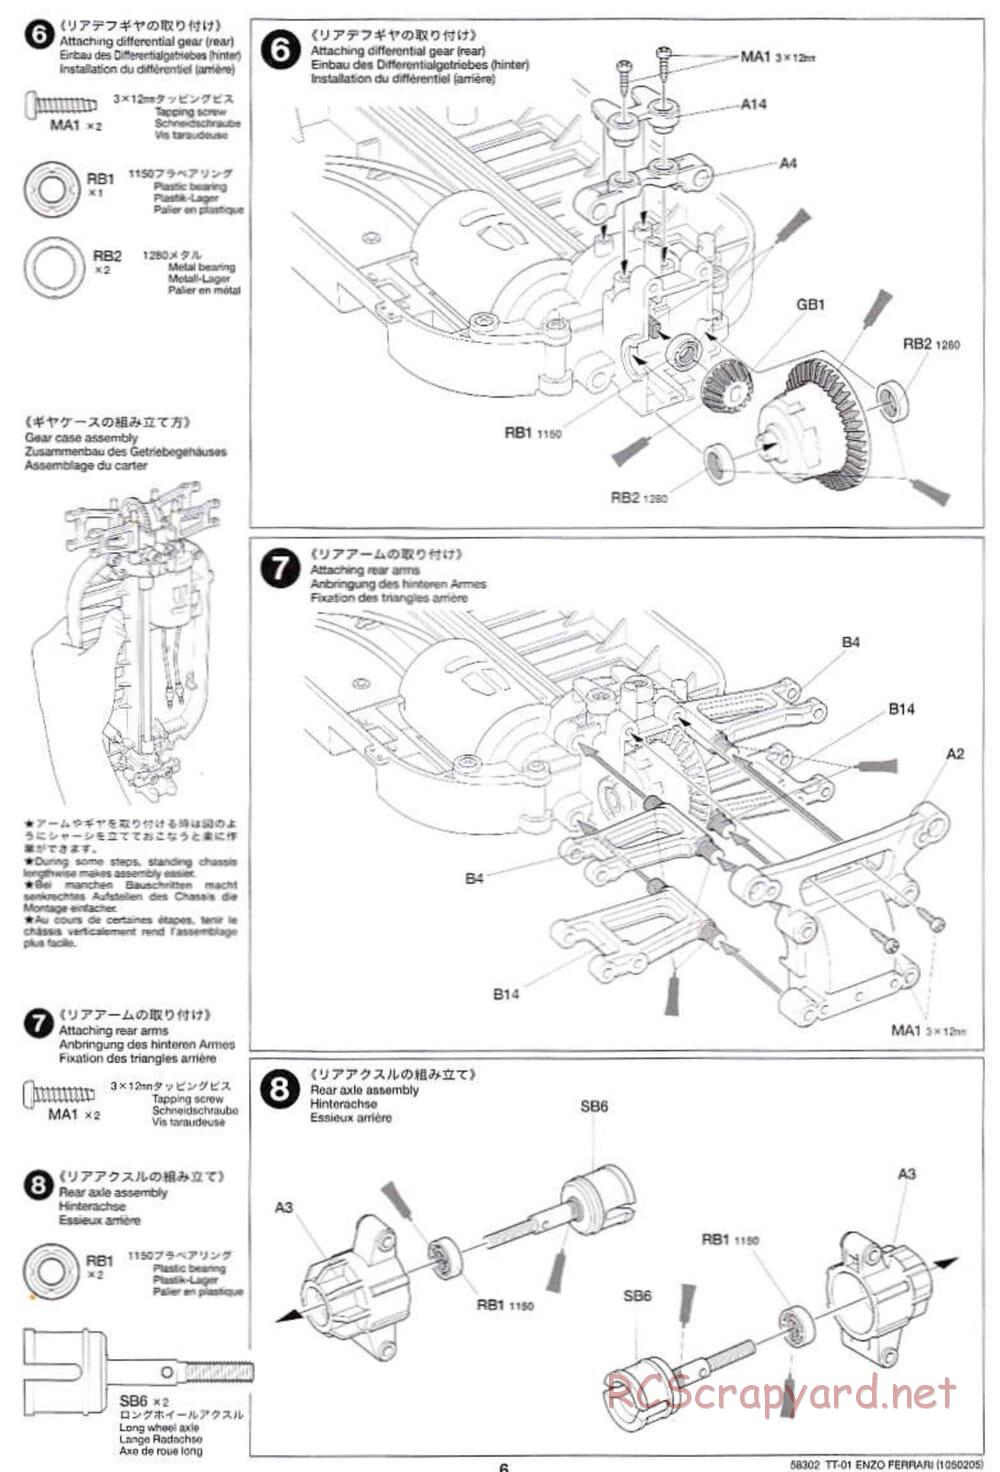 Tamiya - Enzo Ferrari - TT-01 Chassis - Manual - Page 6